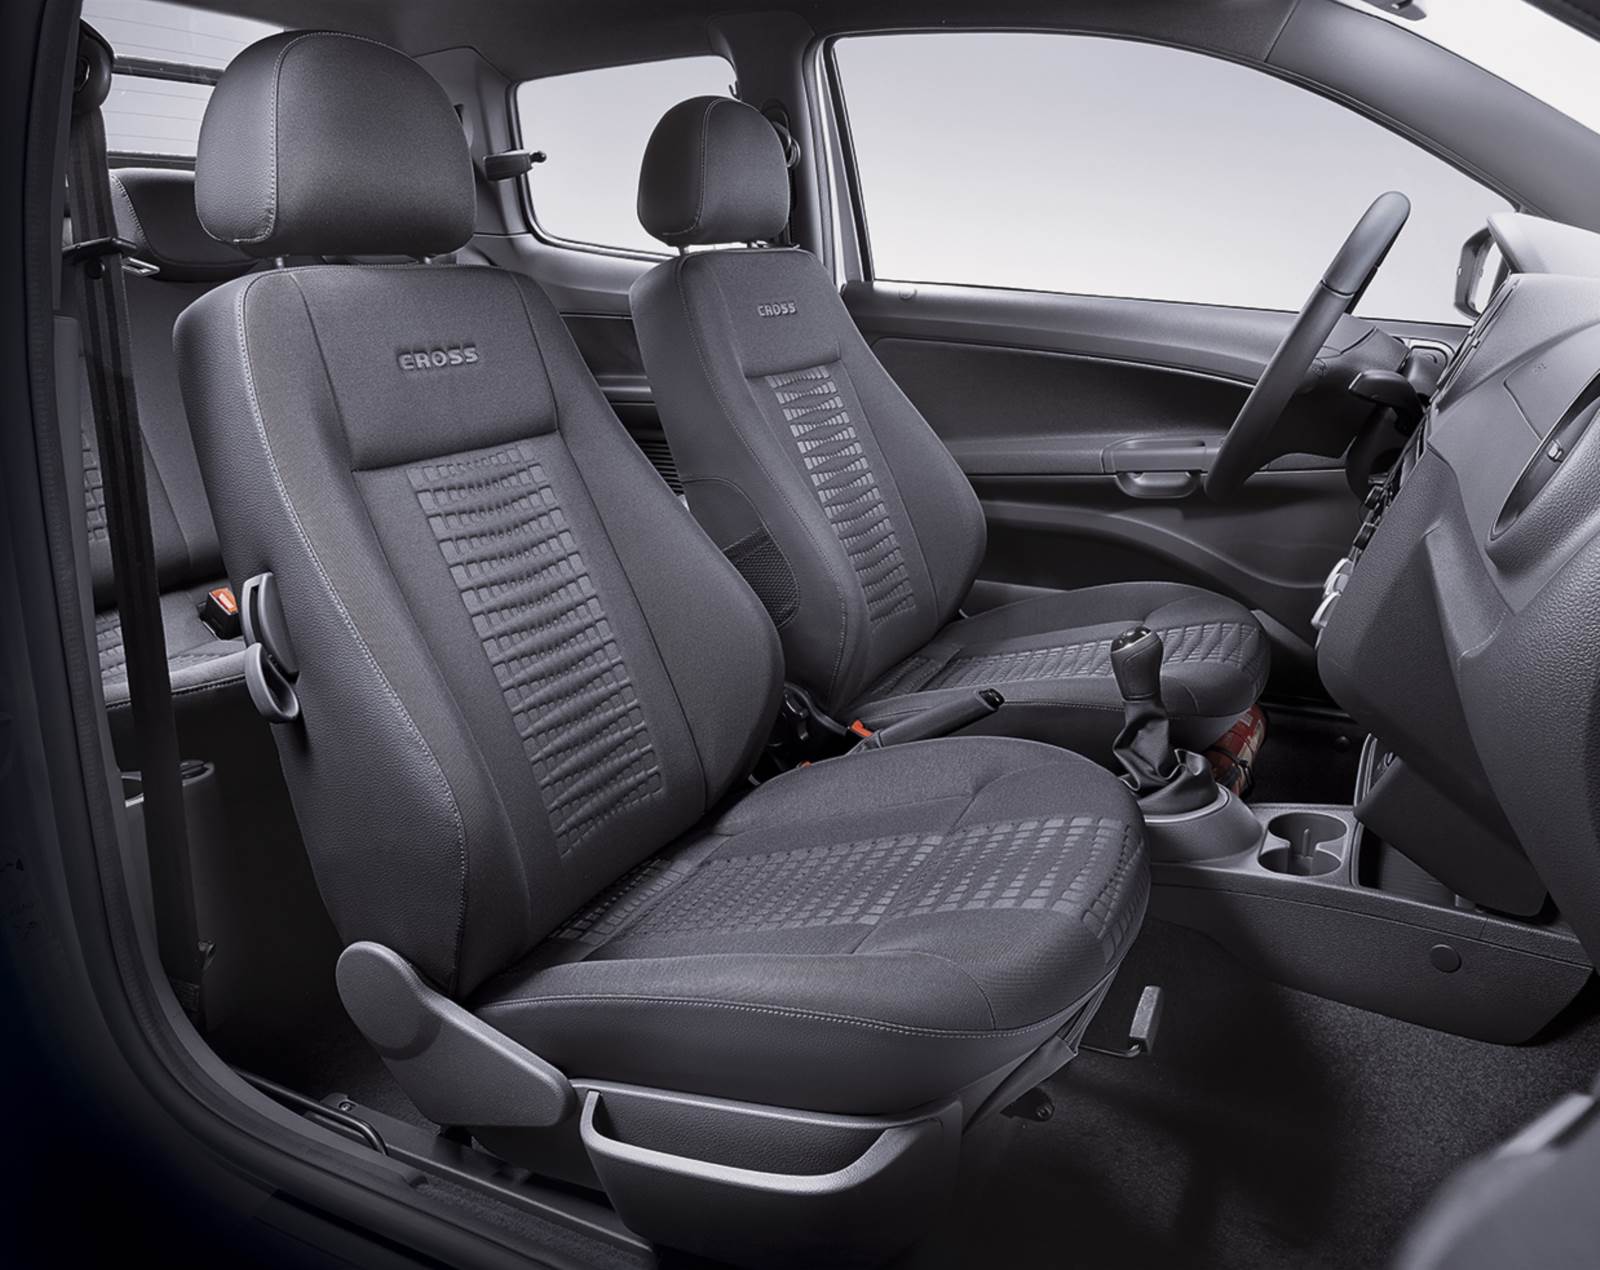 VW Saveiro Cabine Dupla 2015 Cross - interior